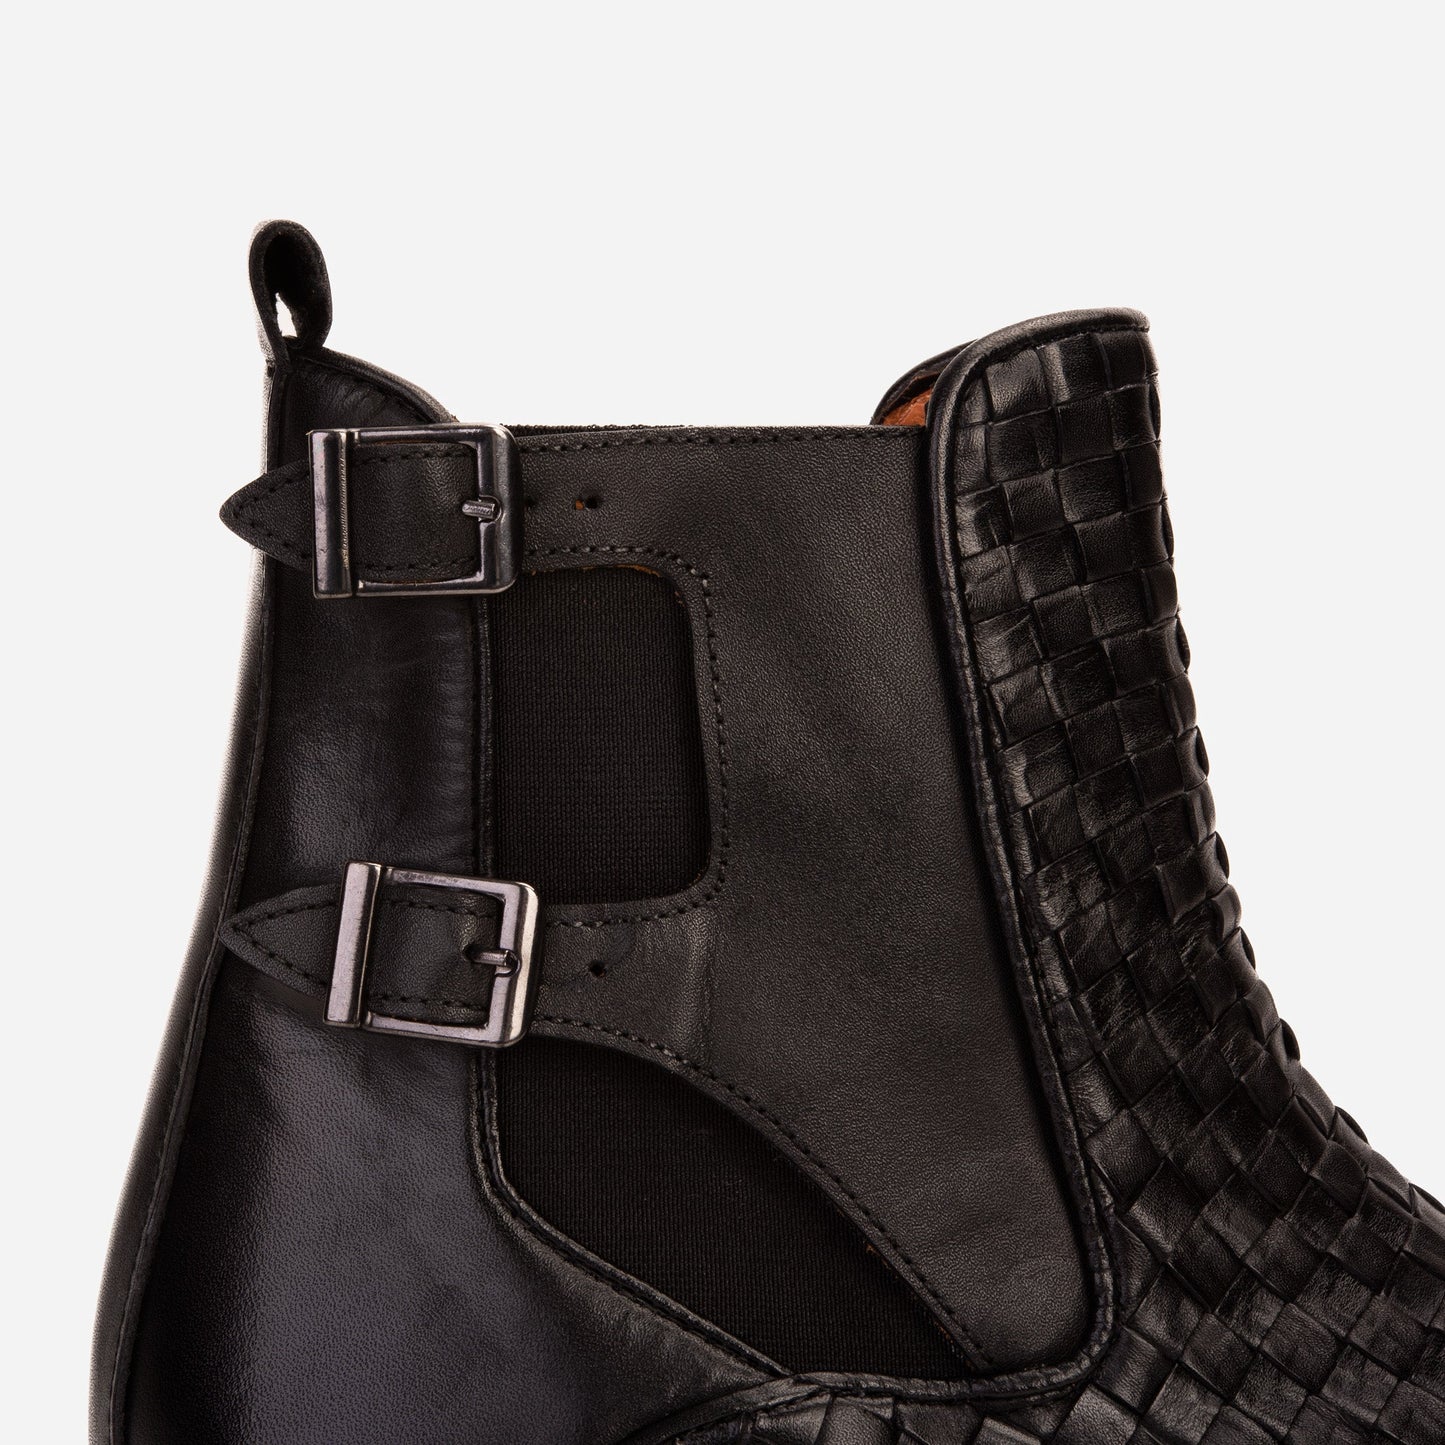 The Rolls Boot Woven Black Leather Double Monk Strap Handmade Men Shoe